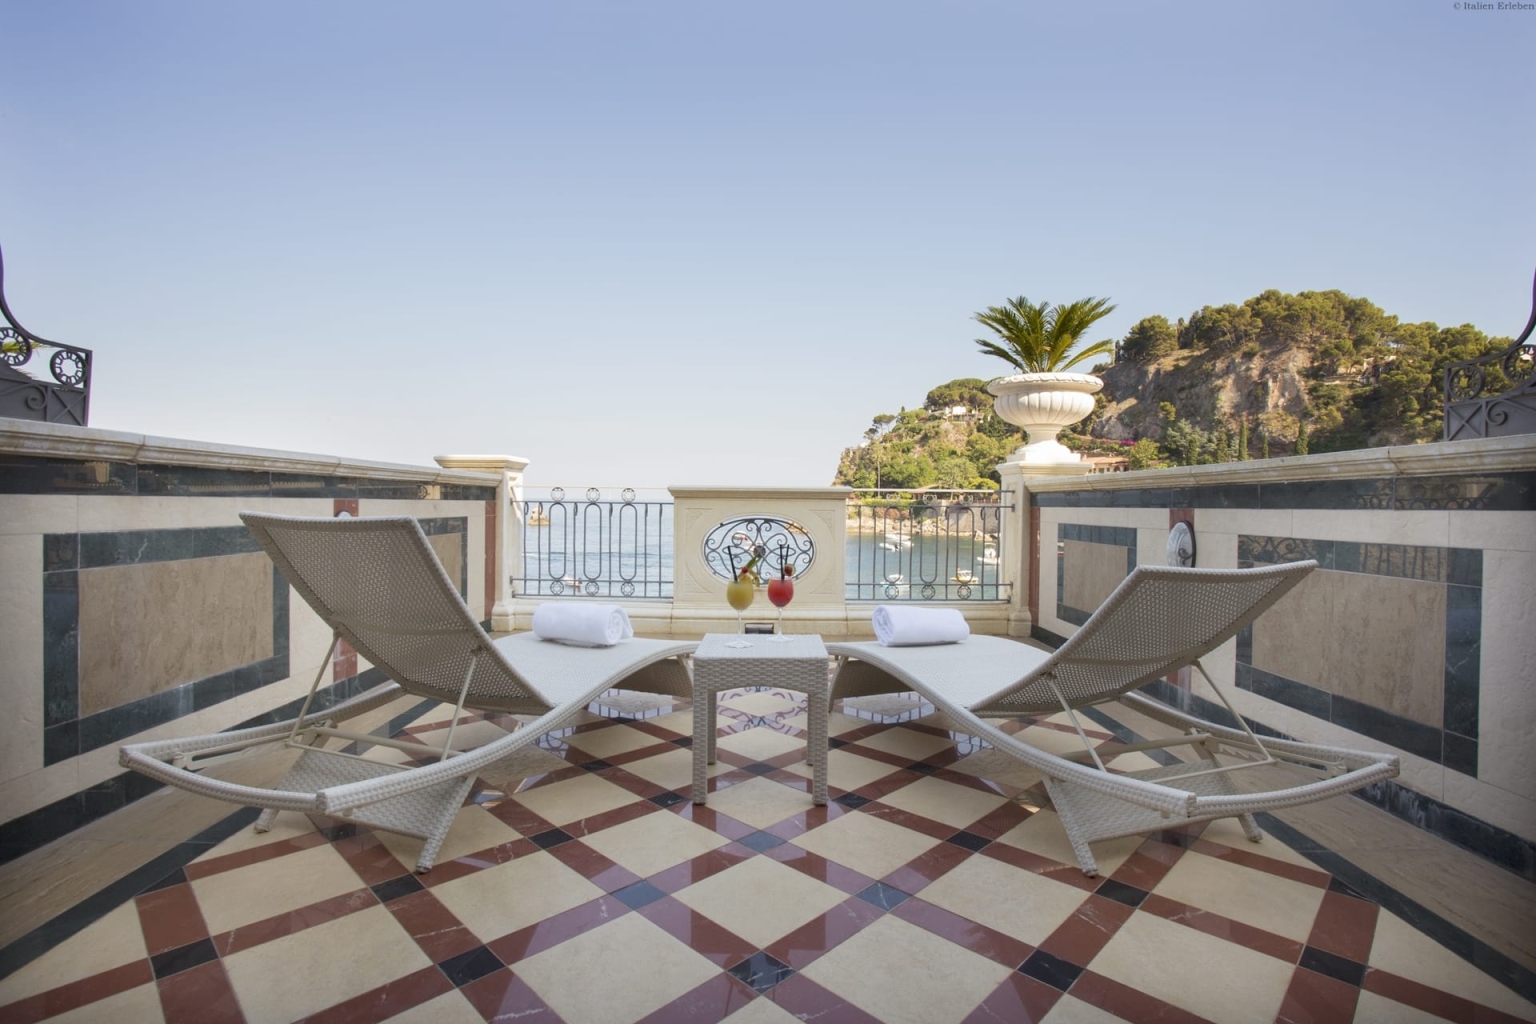 Sizilien Hotel Mazzaro Sea Palace Taormina Mare Bucht Meer Strand Ost Insel Pool Terrasse